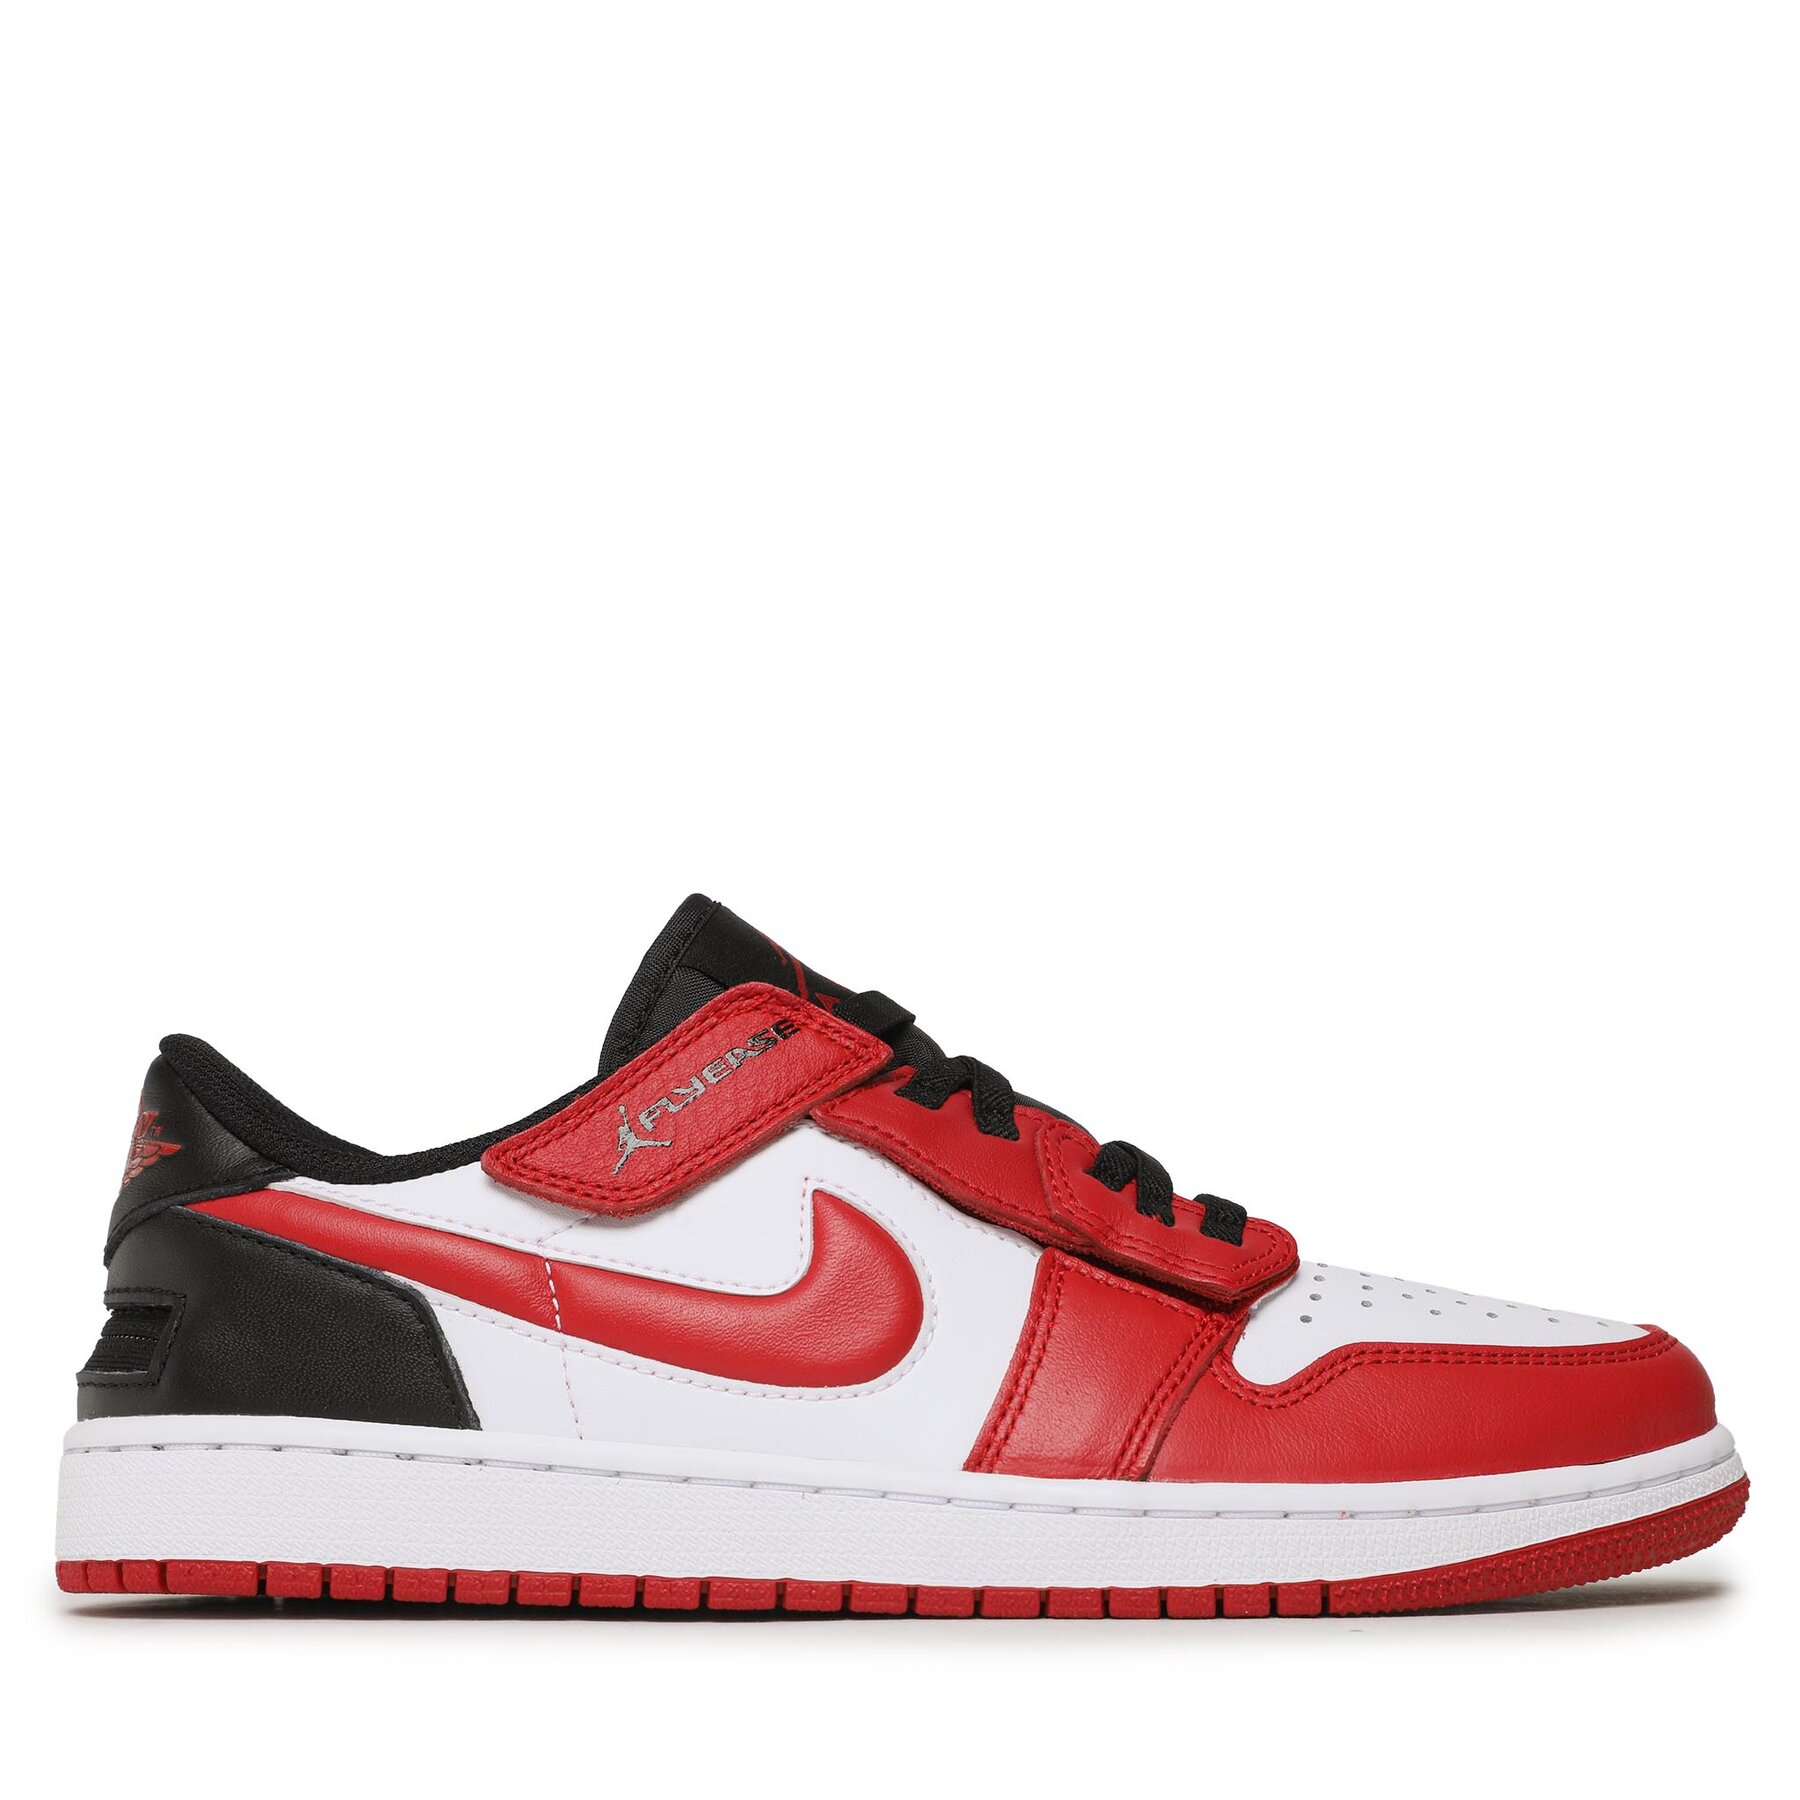 Comprar en oferta Nike Air Jordan 1 Low FlyEase white/black/red